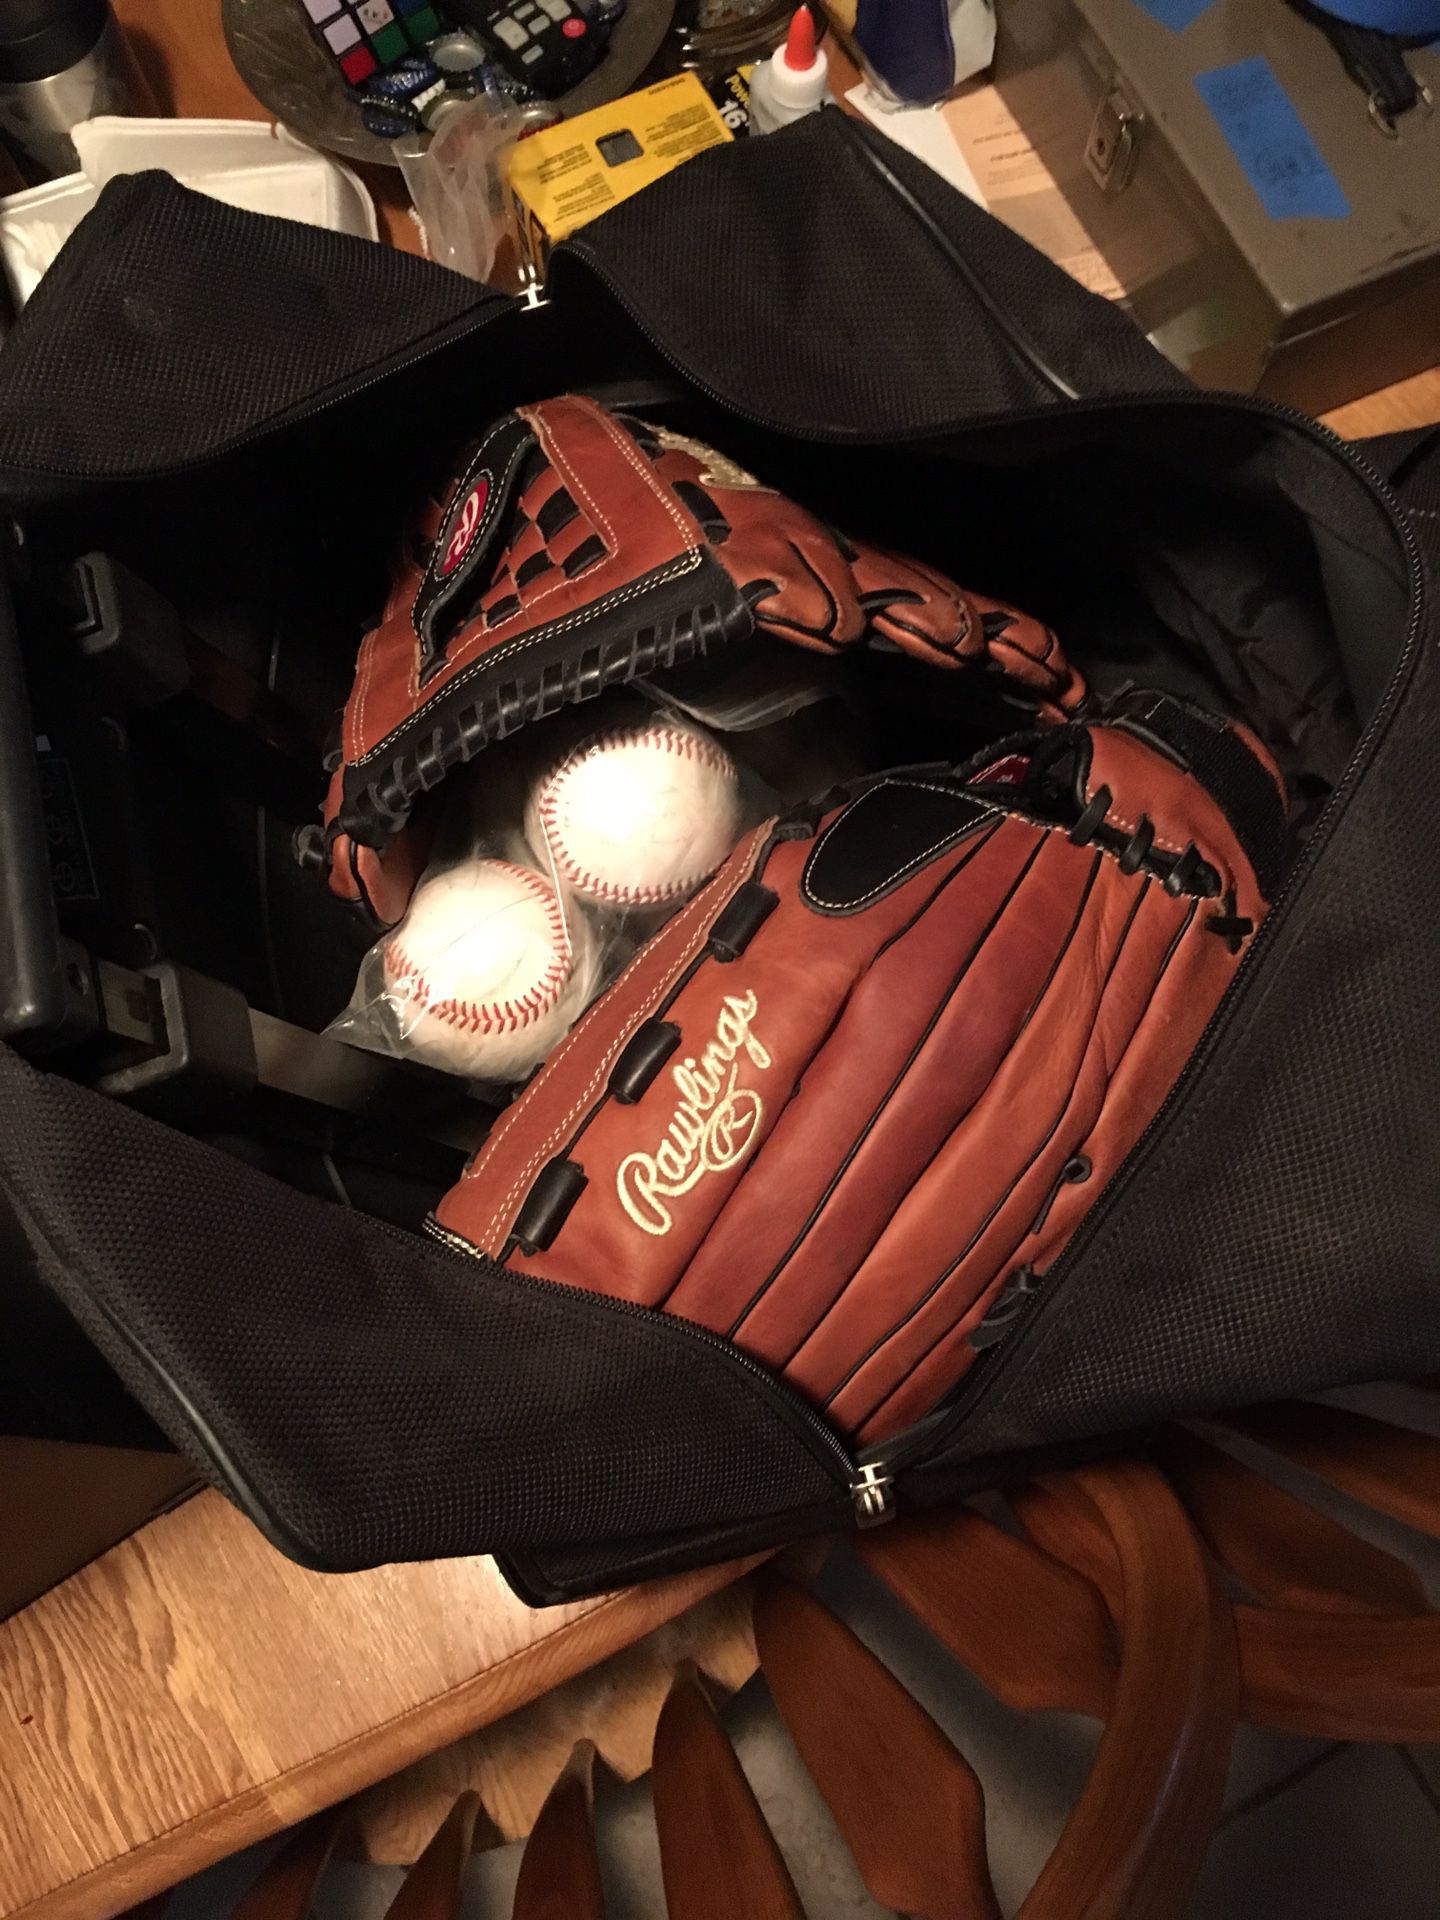 Baseball soft ball gloves with baseballs